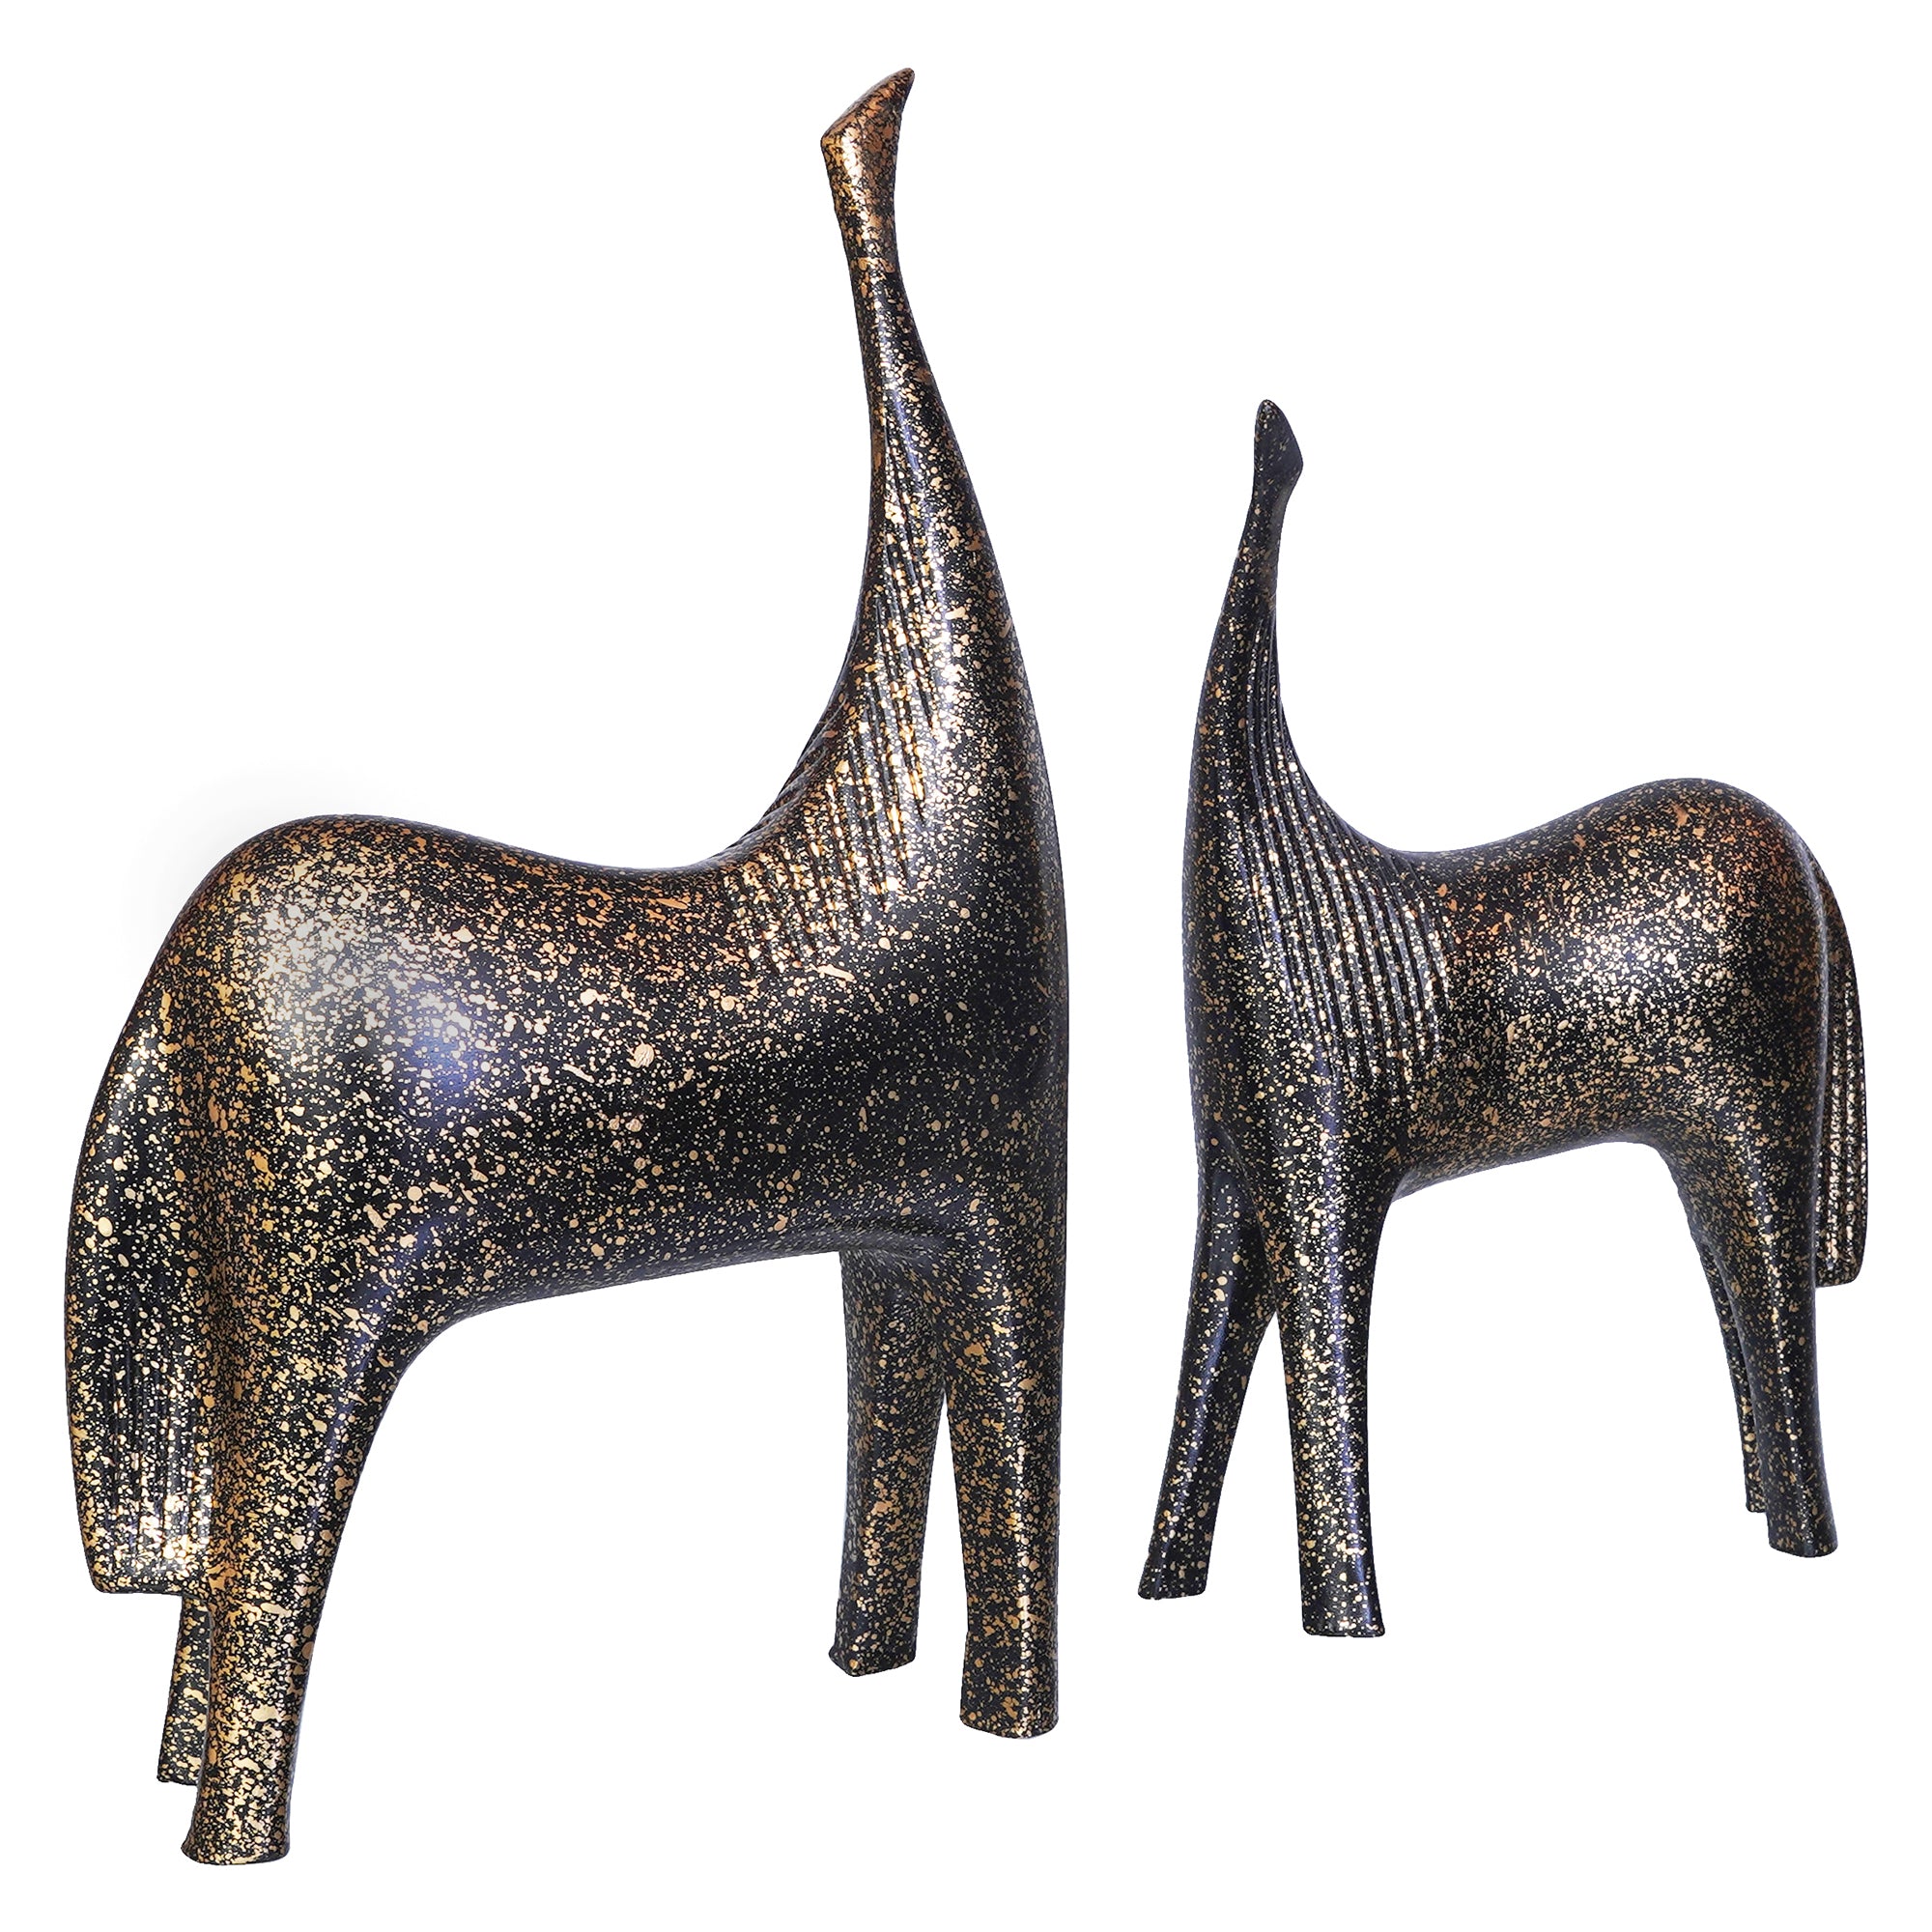 Set of 2 Black & Golden Horse Statues Decorative Animal Figurines 7